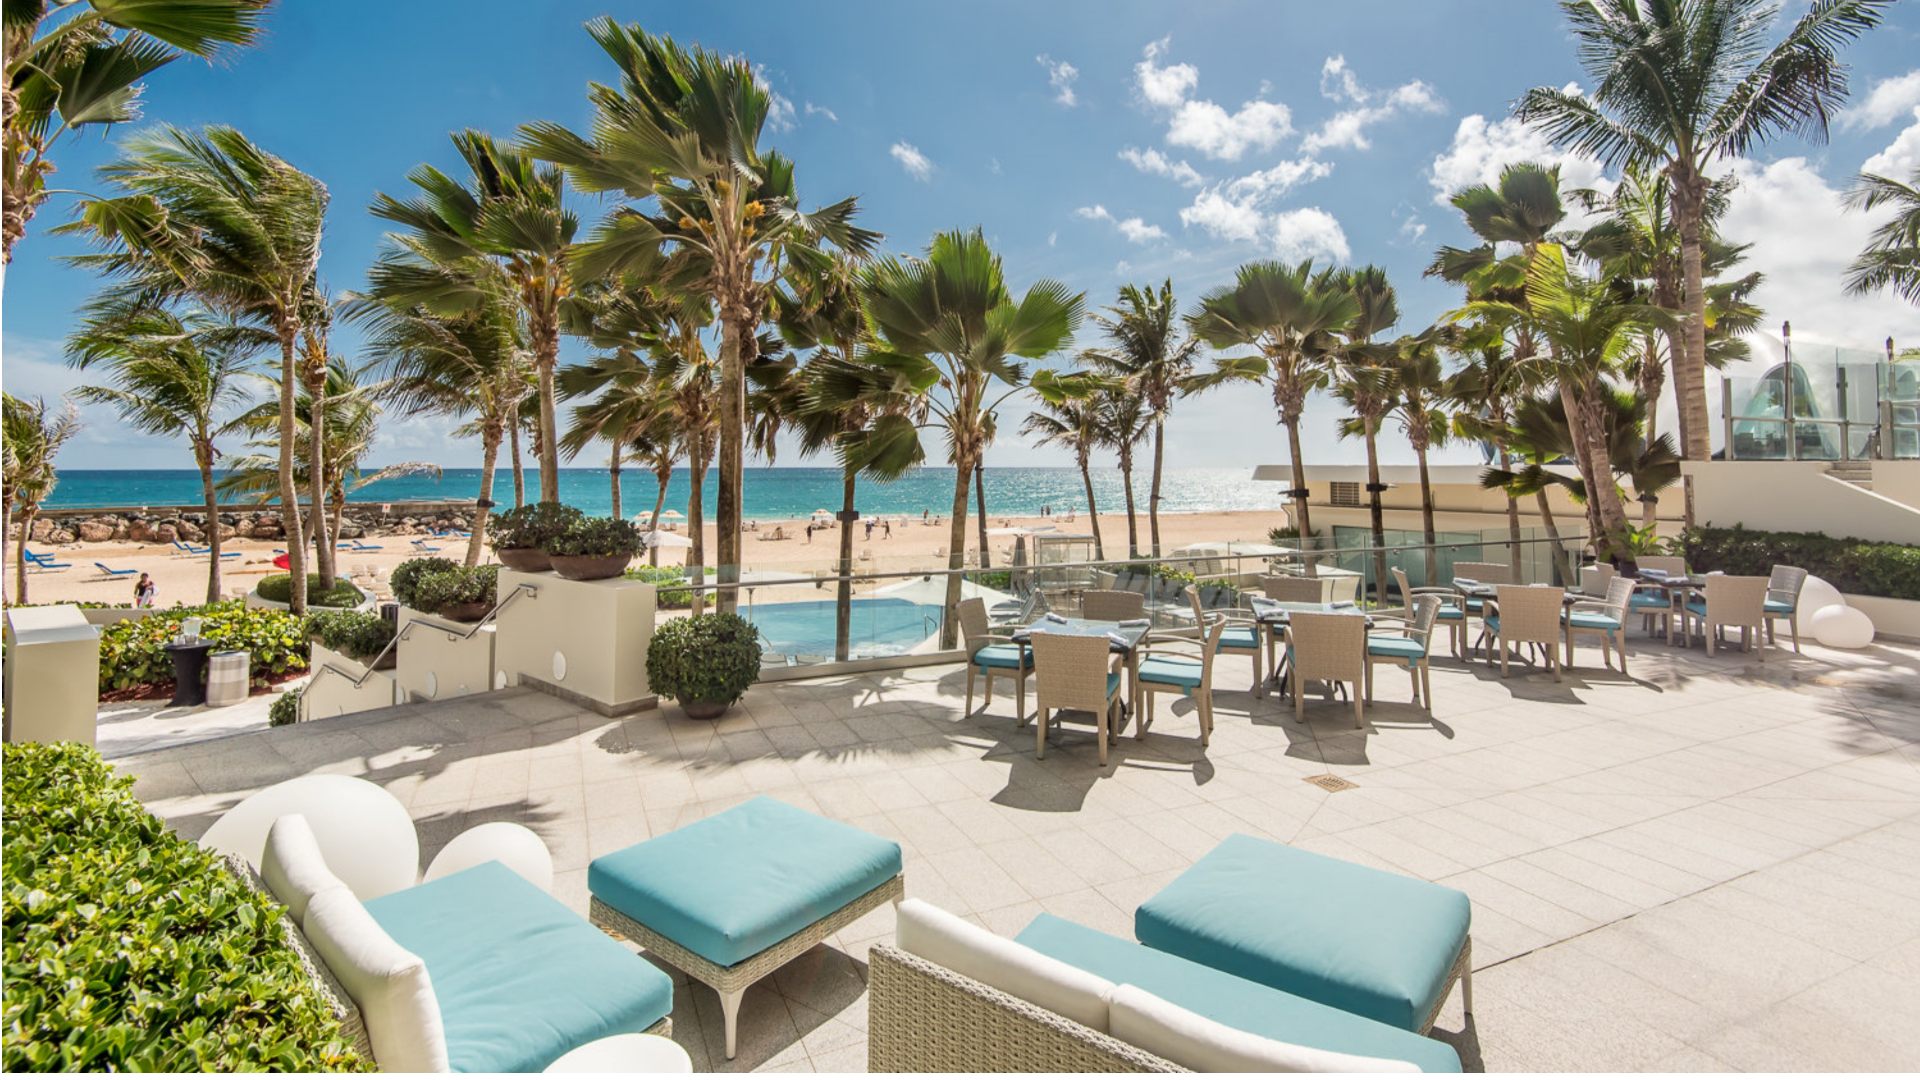 Lounge overlooking beach